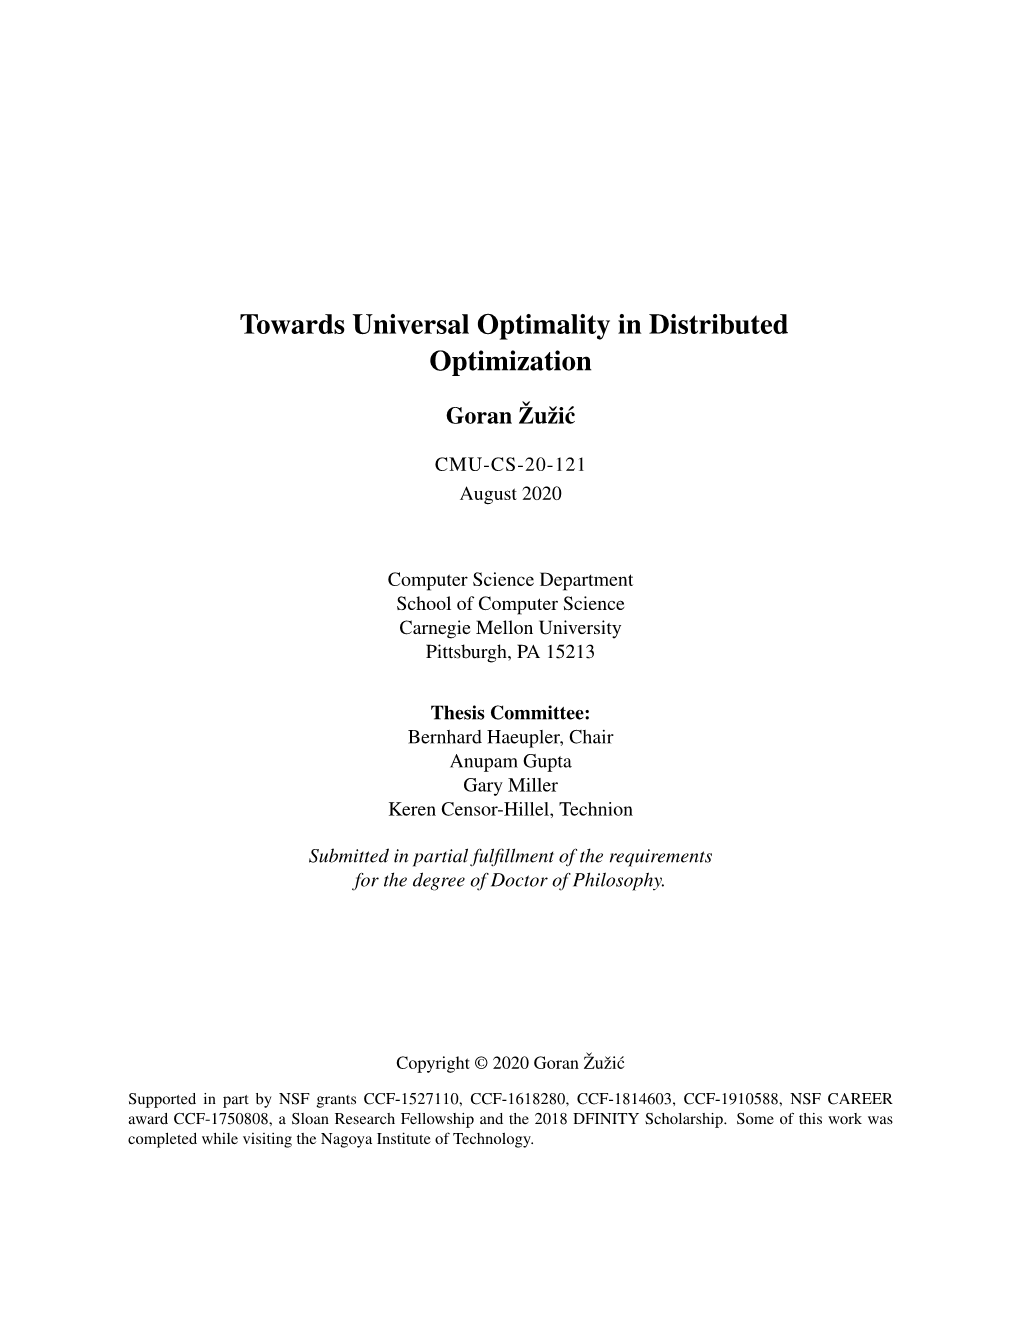 Towards Universal Optimality in Distributed Optimization